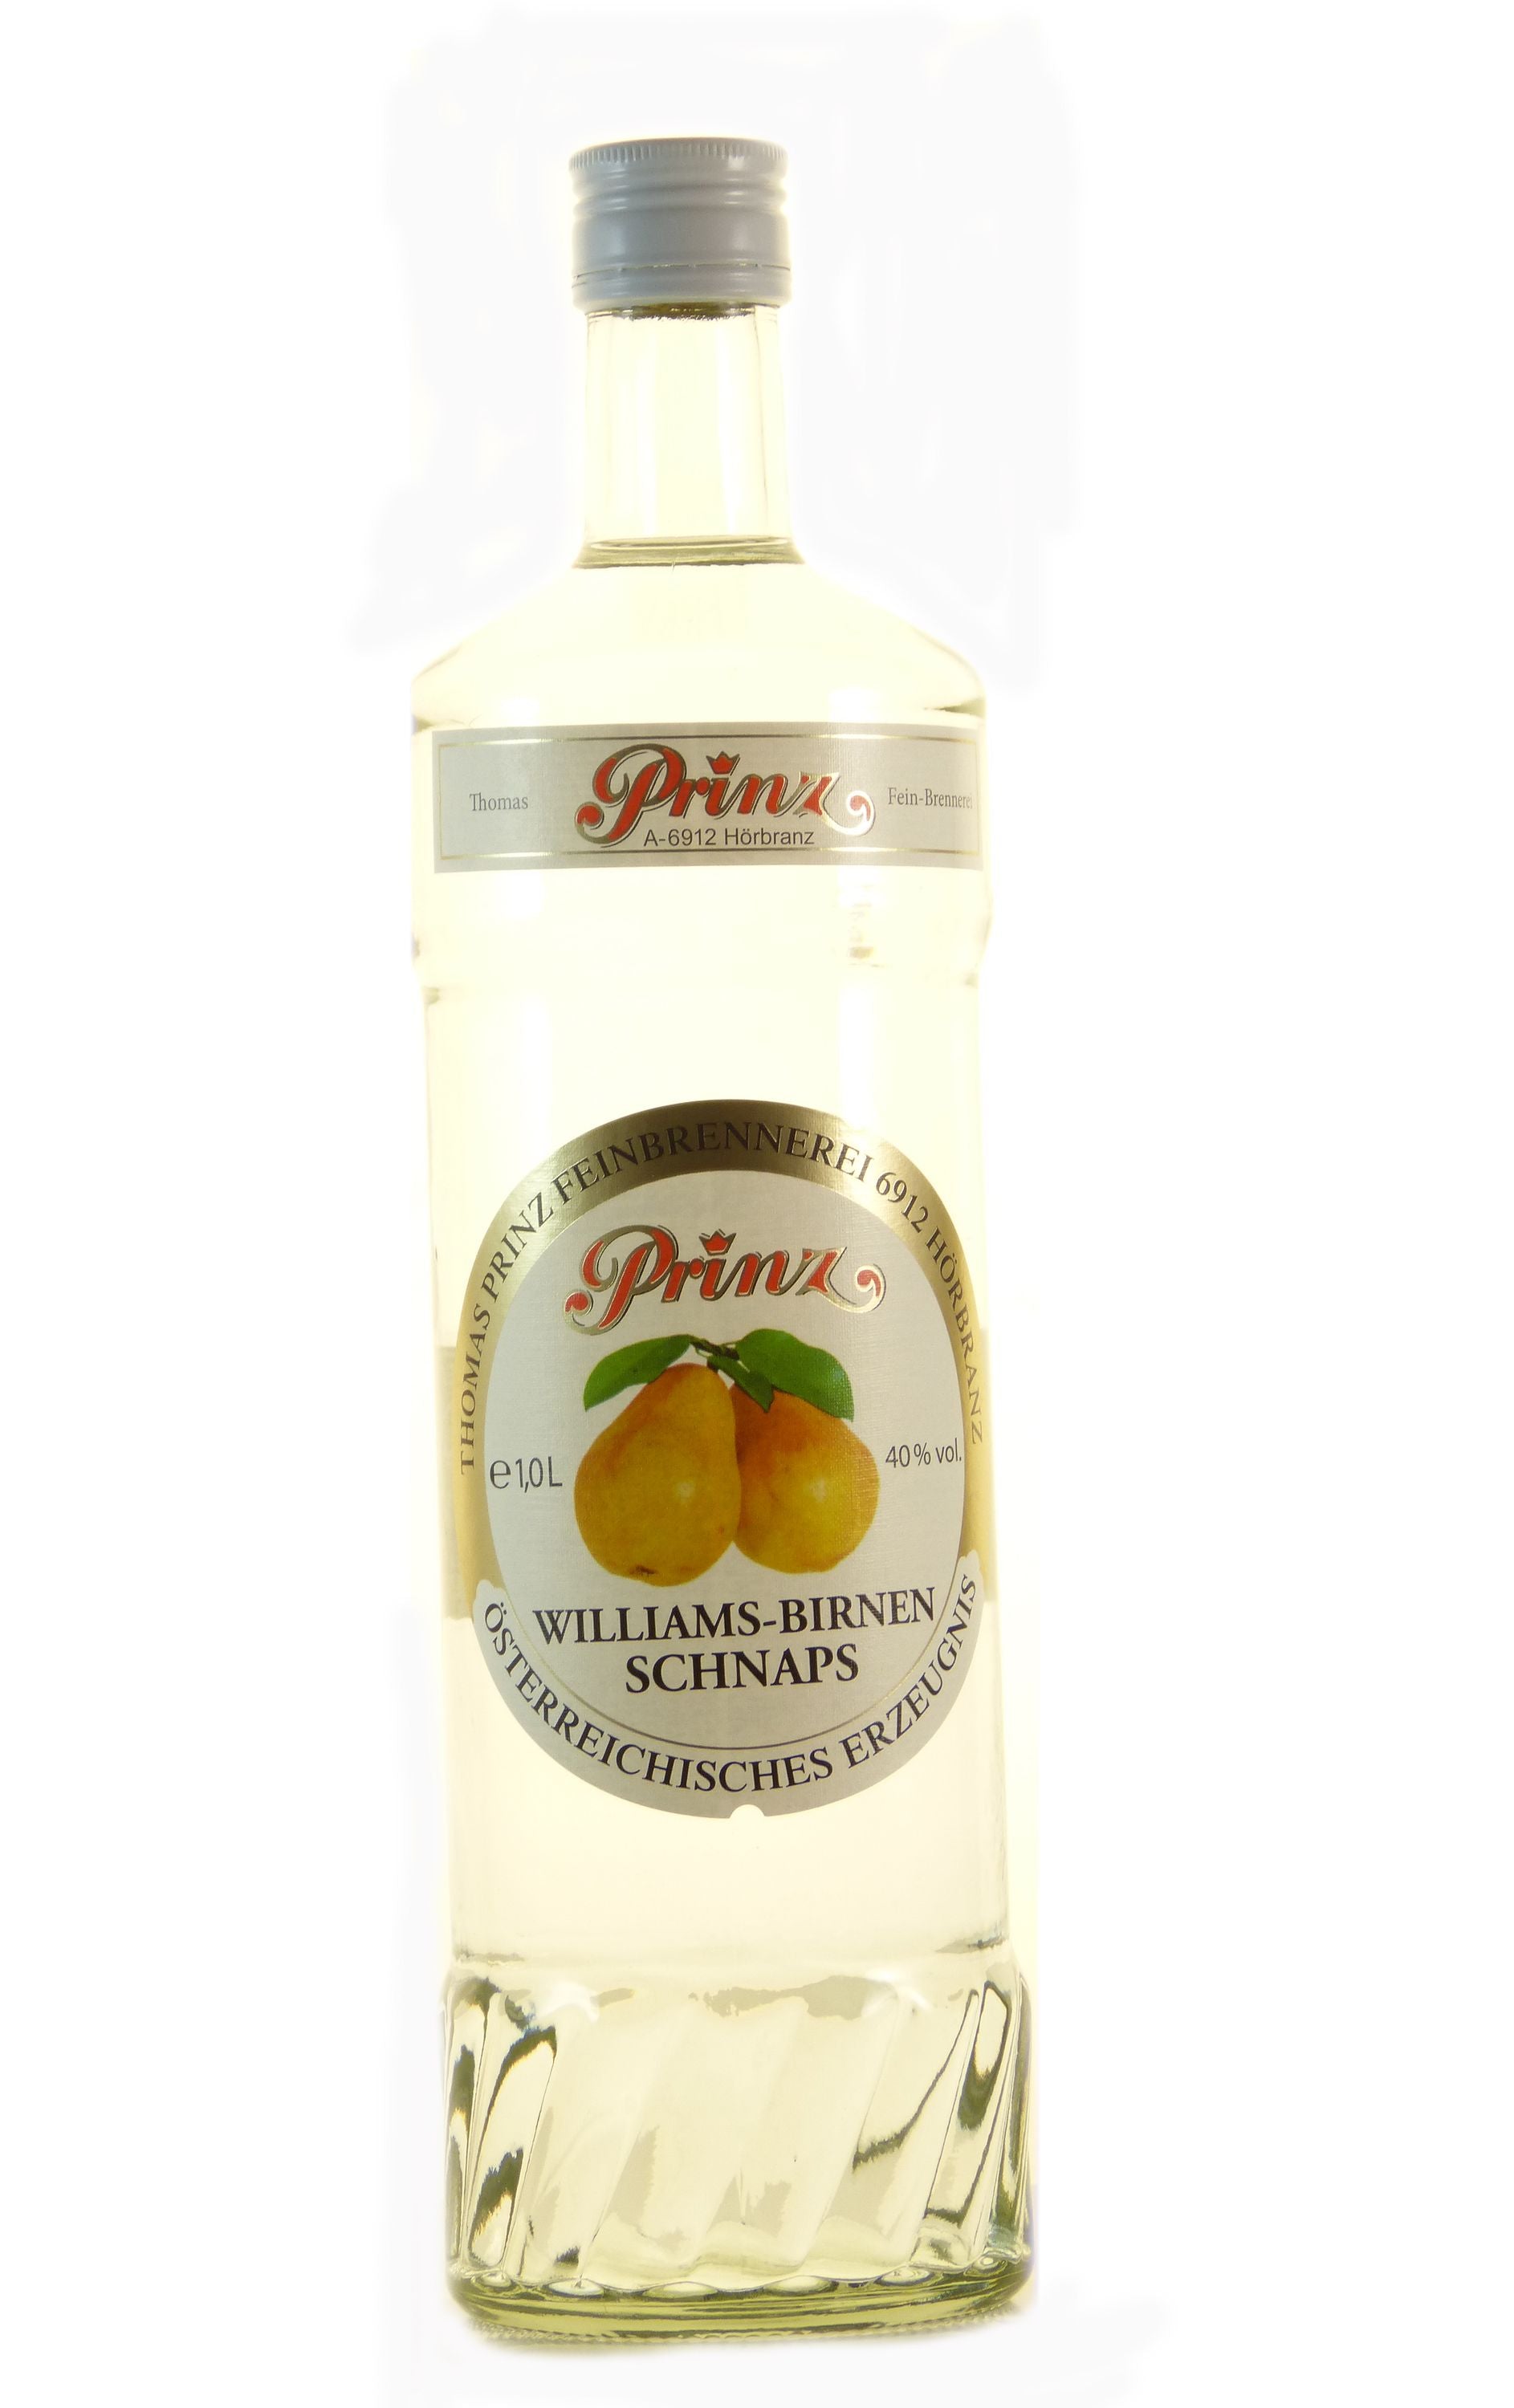 Prince Williams pear schnapps 1.0l, alc. 40% by volume